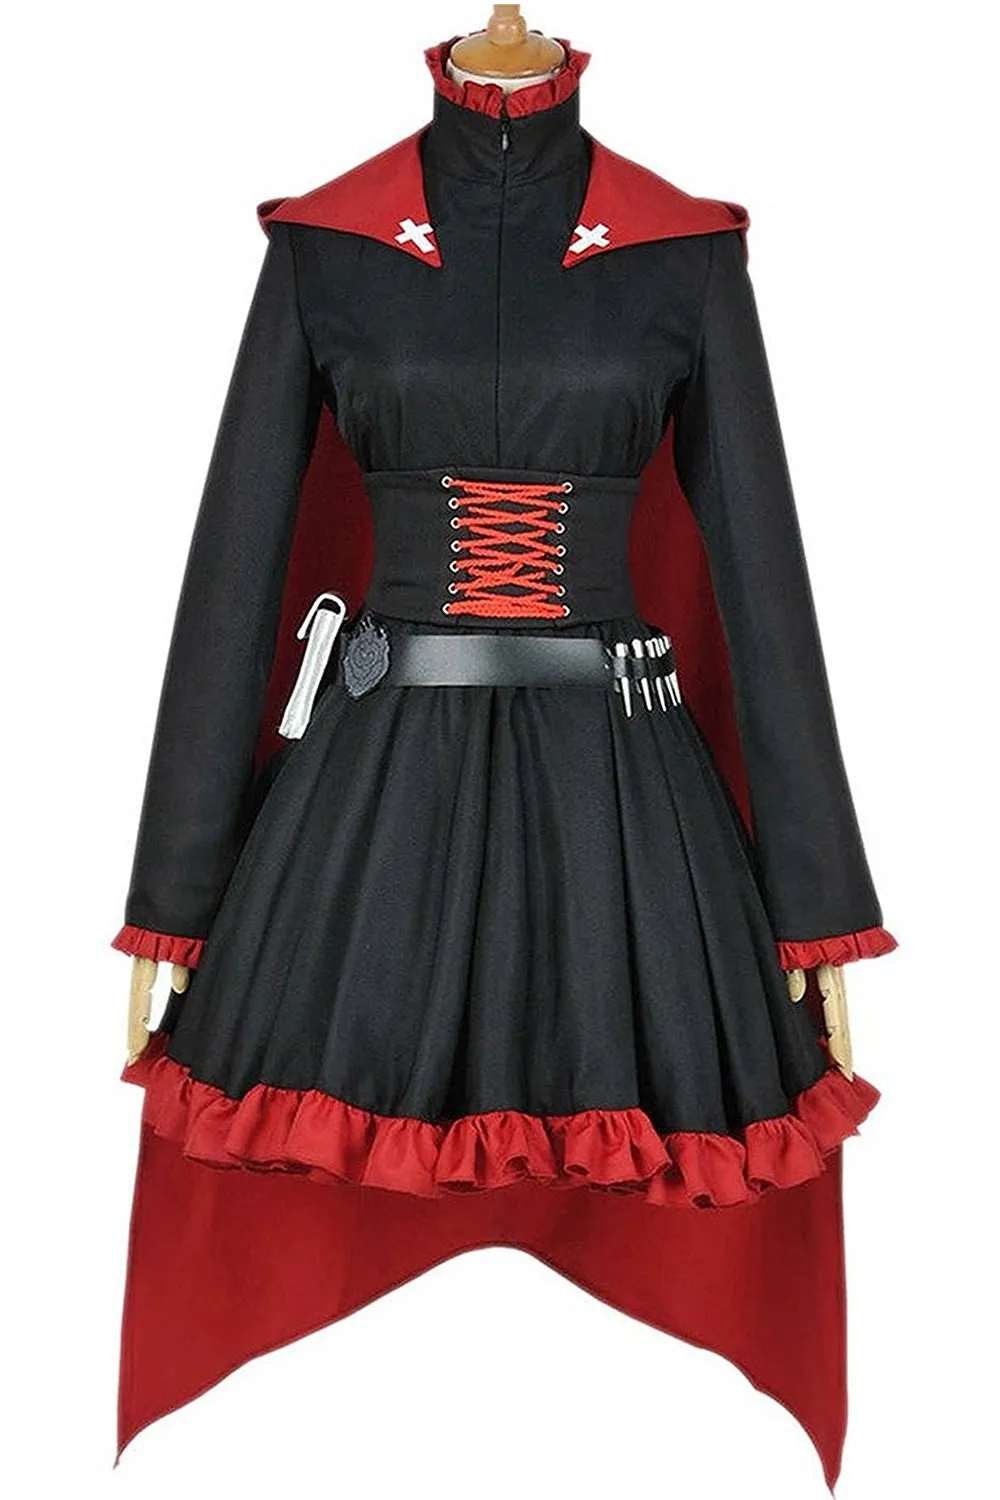 Kukucos Anime Halloween RWBY Costume Party Dress Uniforme ragazza vestito tuta regalo Cosplay